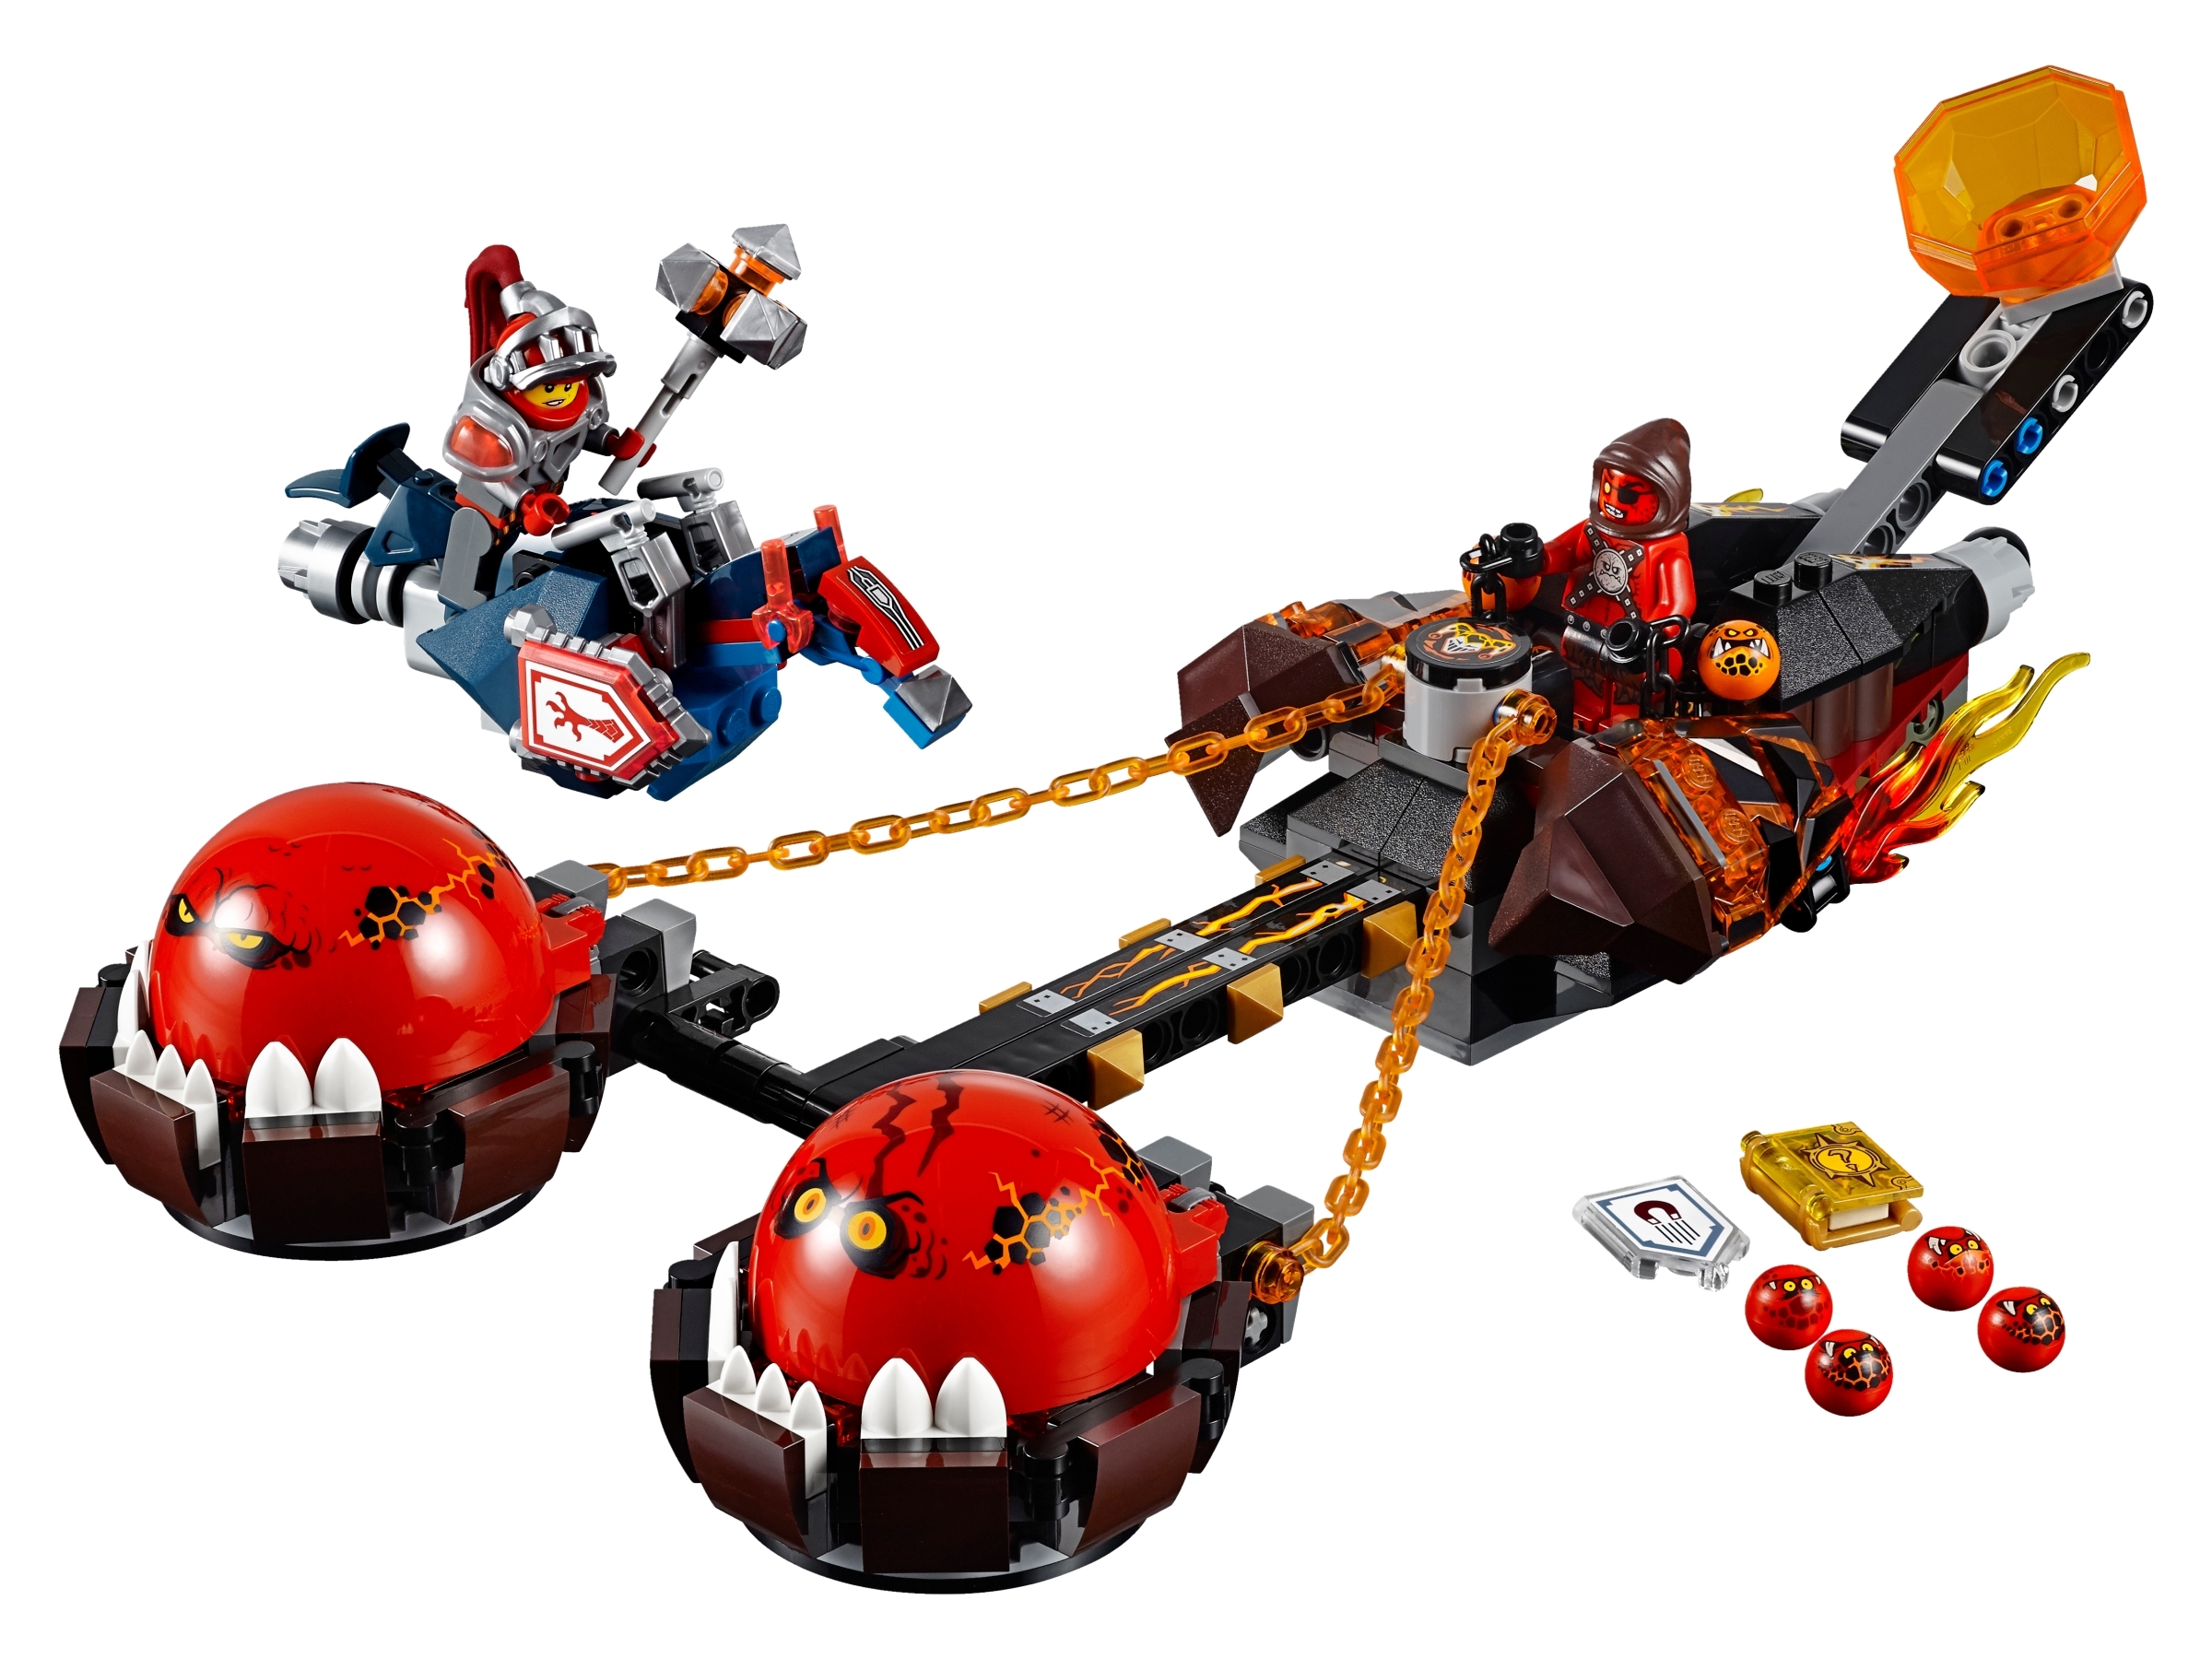 Chariot LEGO Nexo Knights Beast Masters Chaos Chariot 70314 